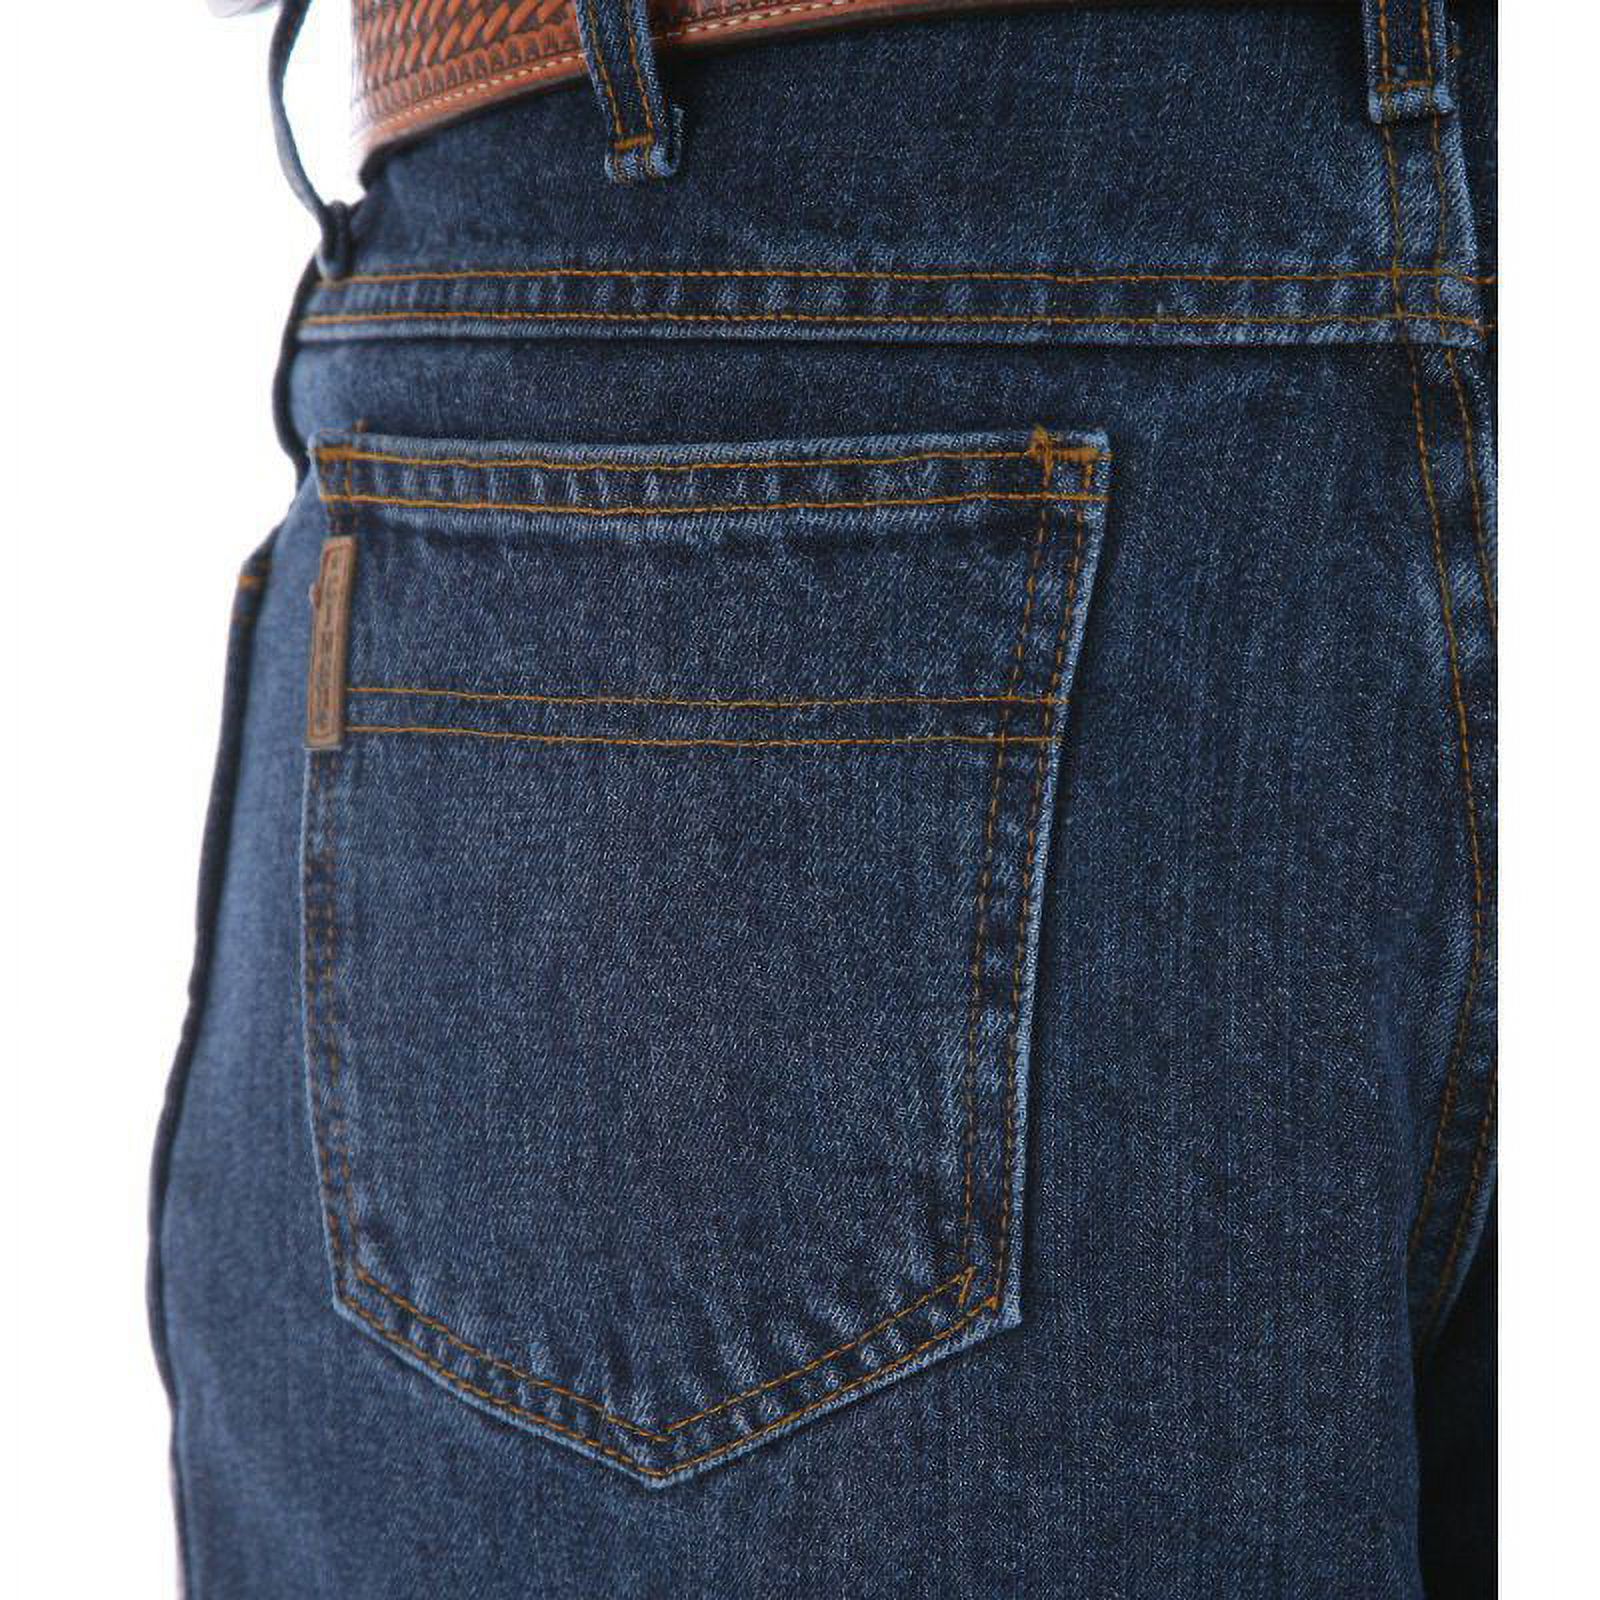 Cinch Apparel Mens Green Label Original Fit Jeans 40x30 Dark Stonewash - image 3 of 4